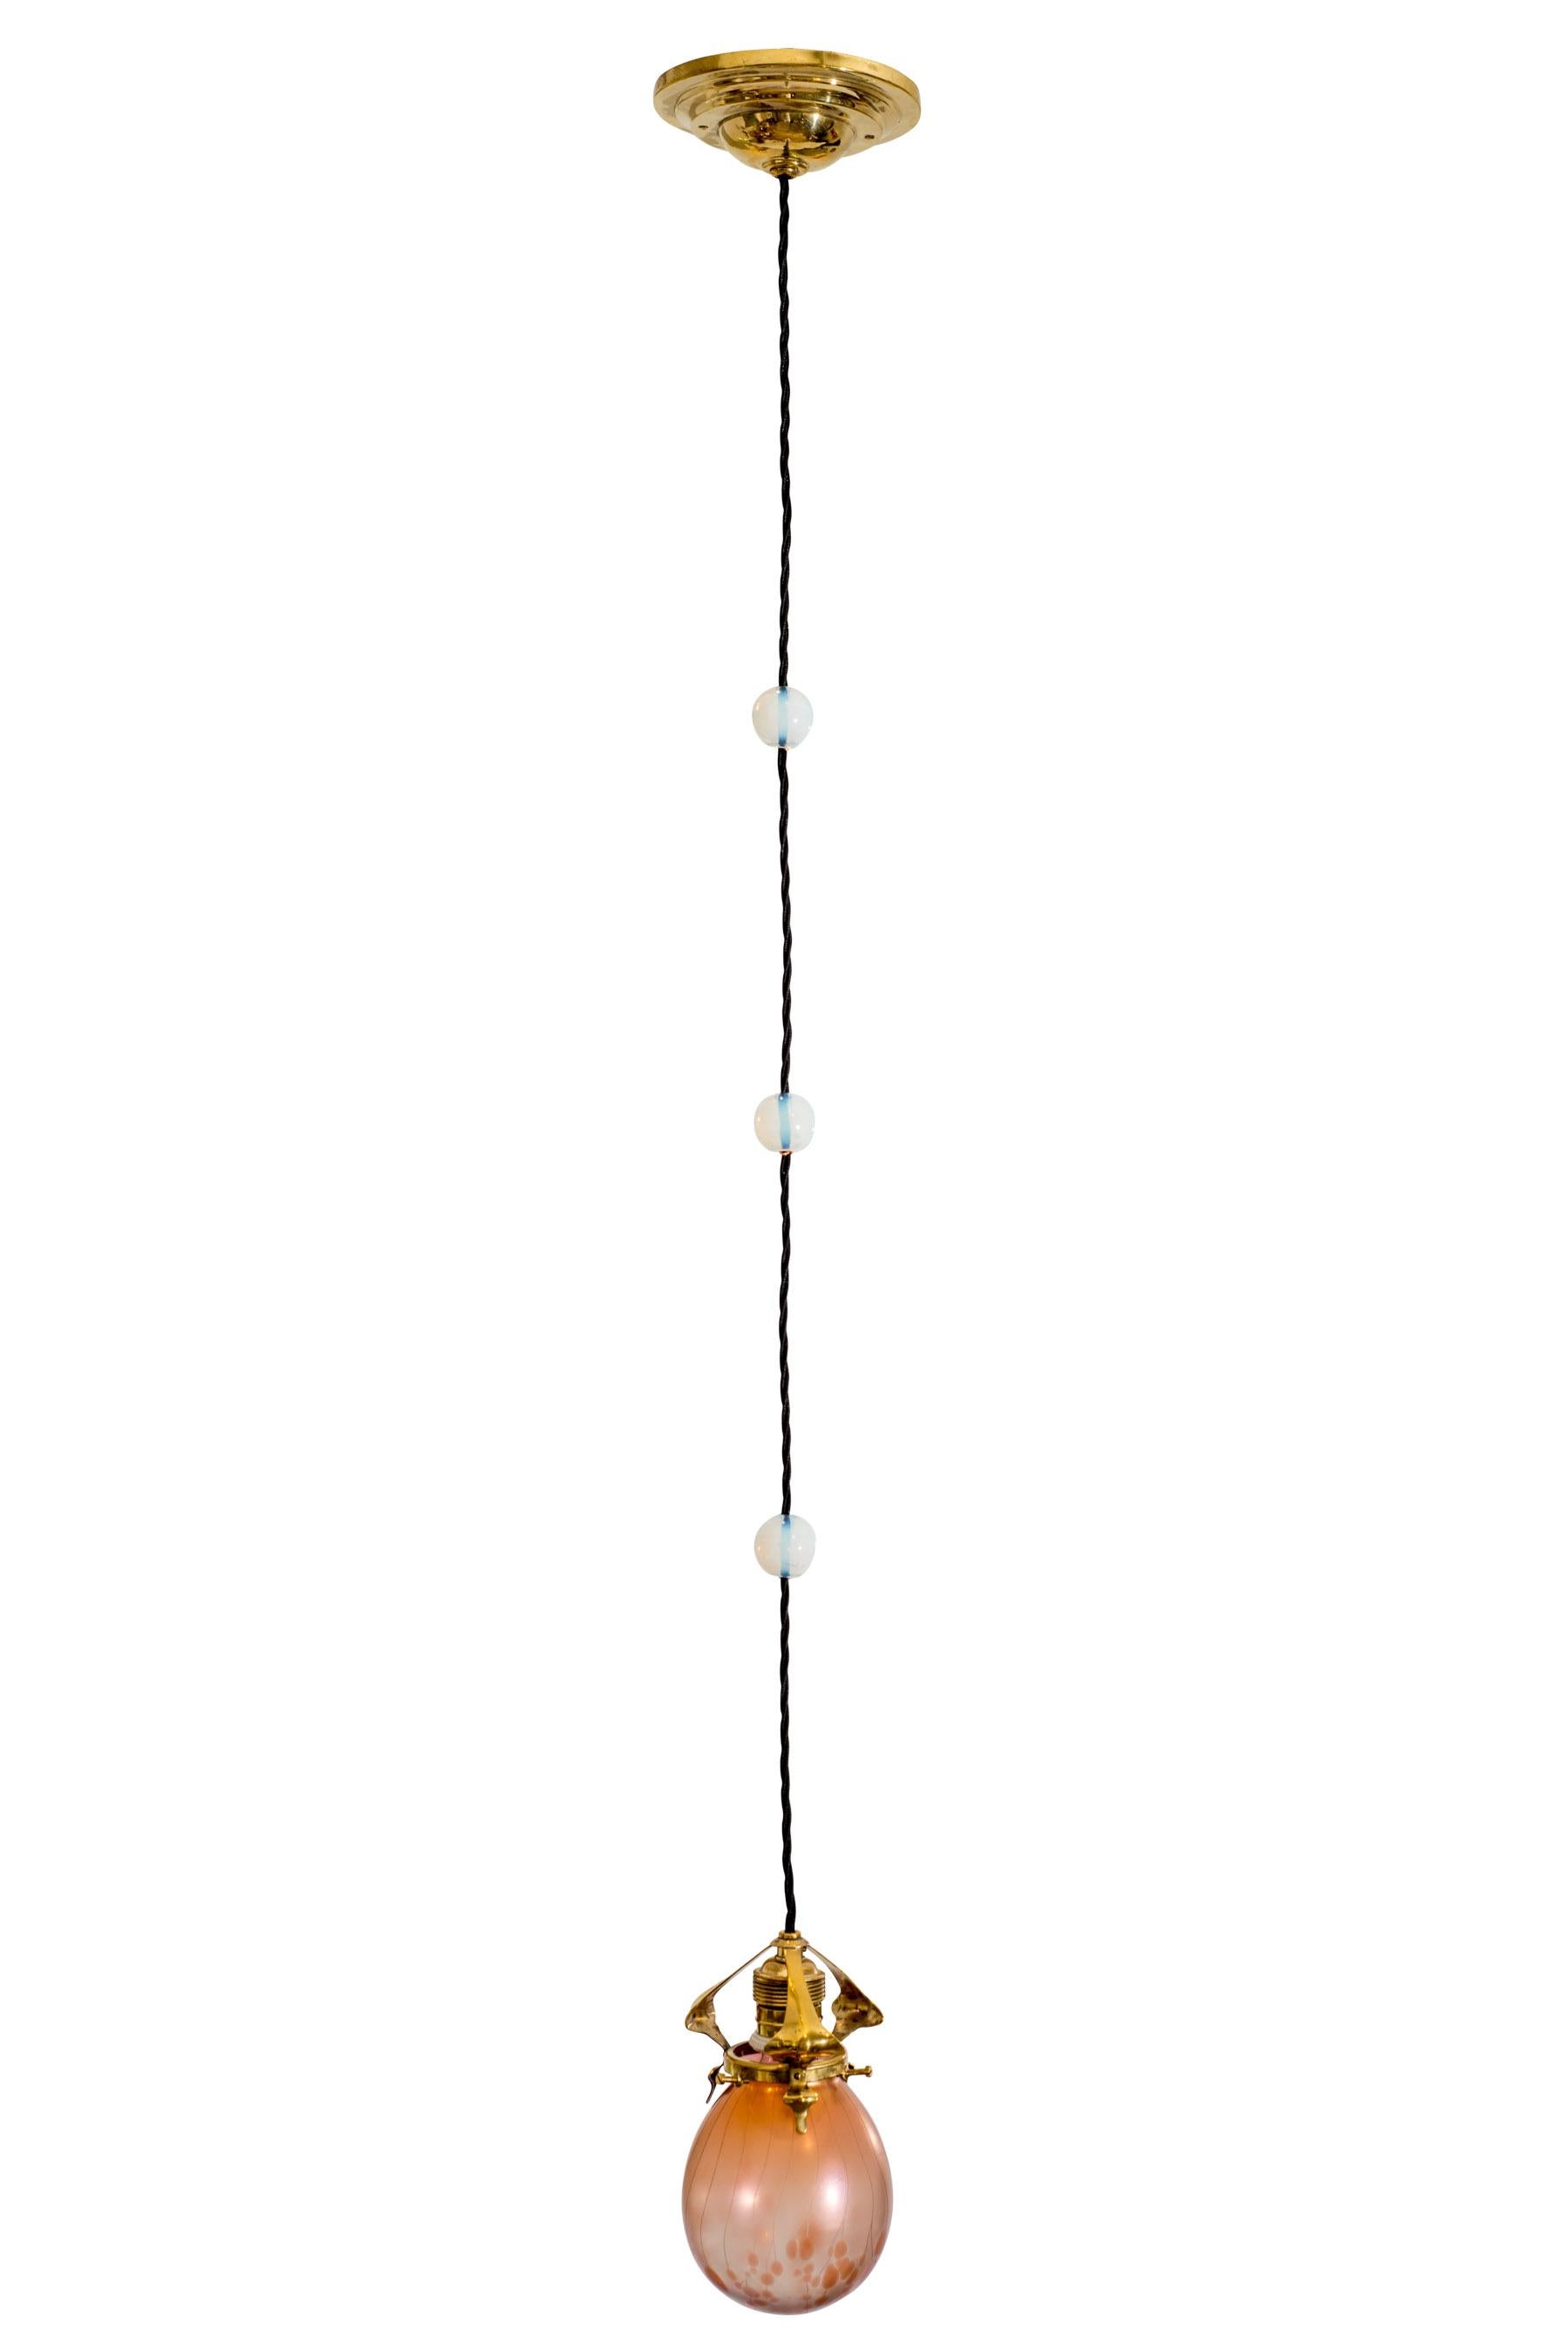 Brass Hanging Lamp Pendant Loetz Glass German Jugendstil circa 1901 Orange